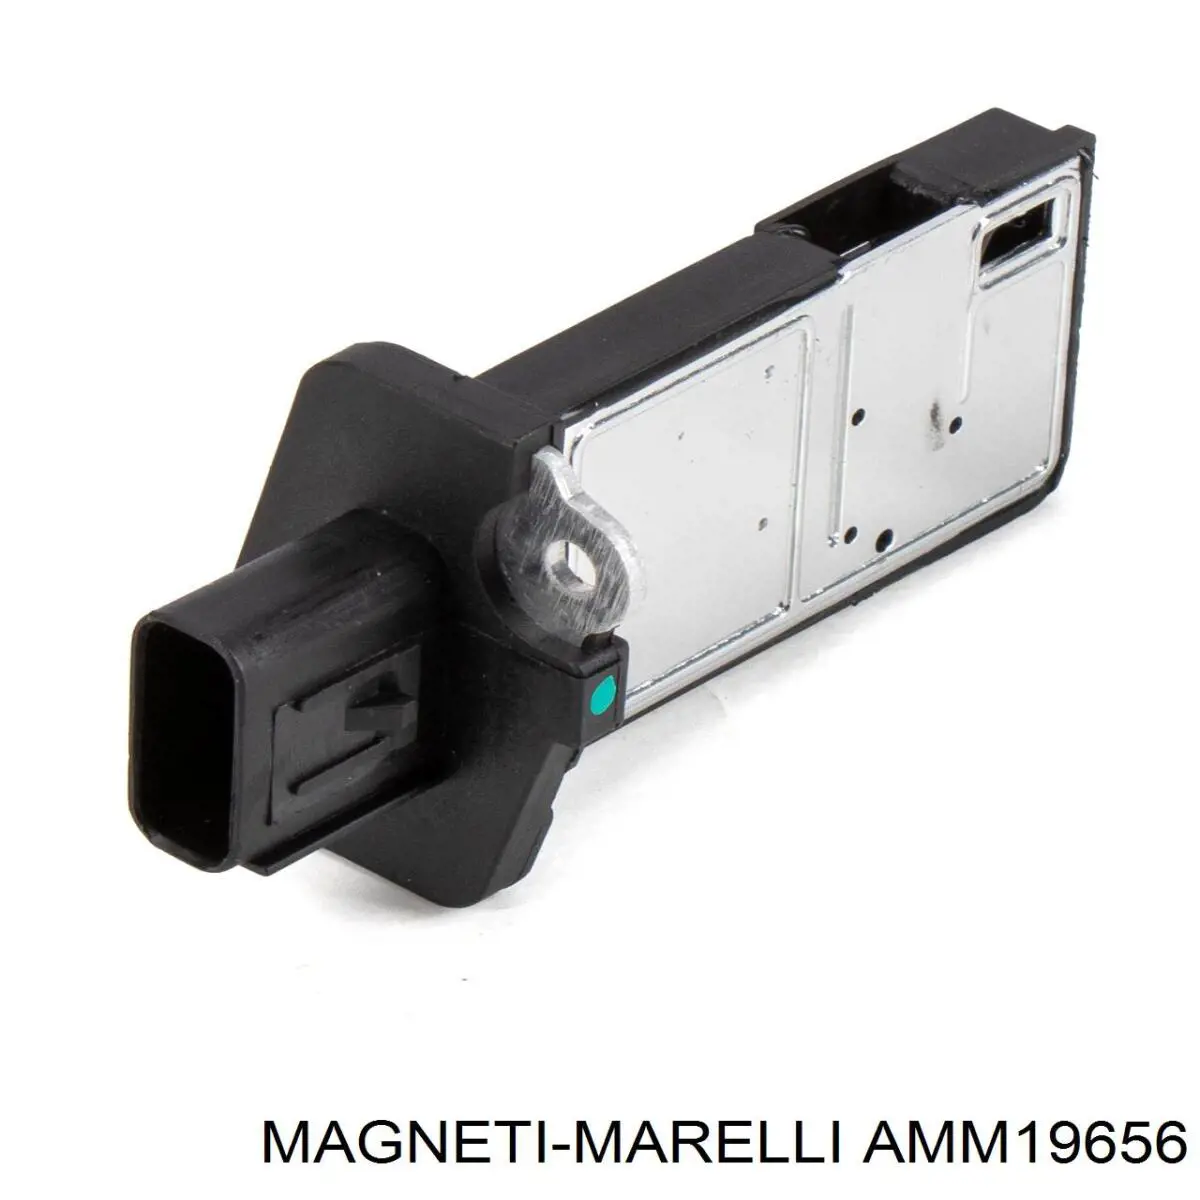 Sensor De Flujo De Aire/Medidor De Flujo (Flujo de Aire Masibo) AMM19656 Magneti Marelli